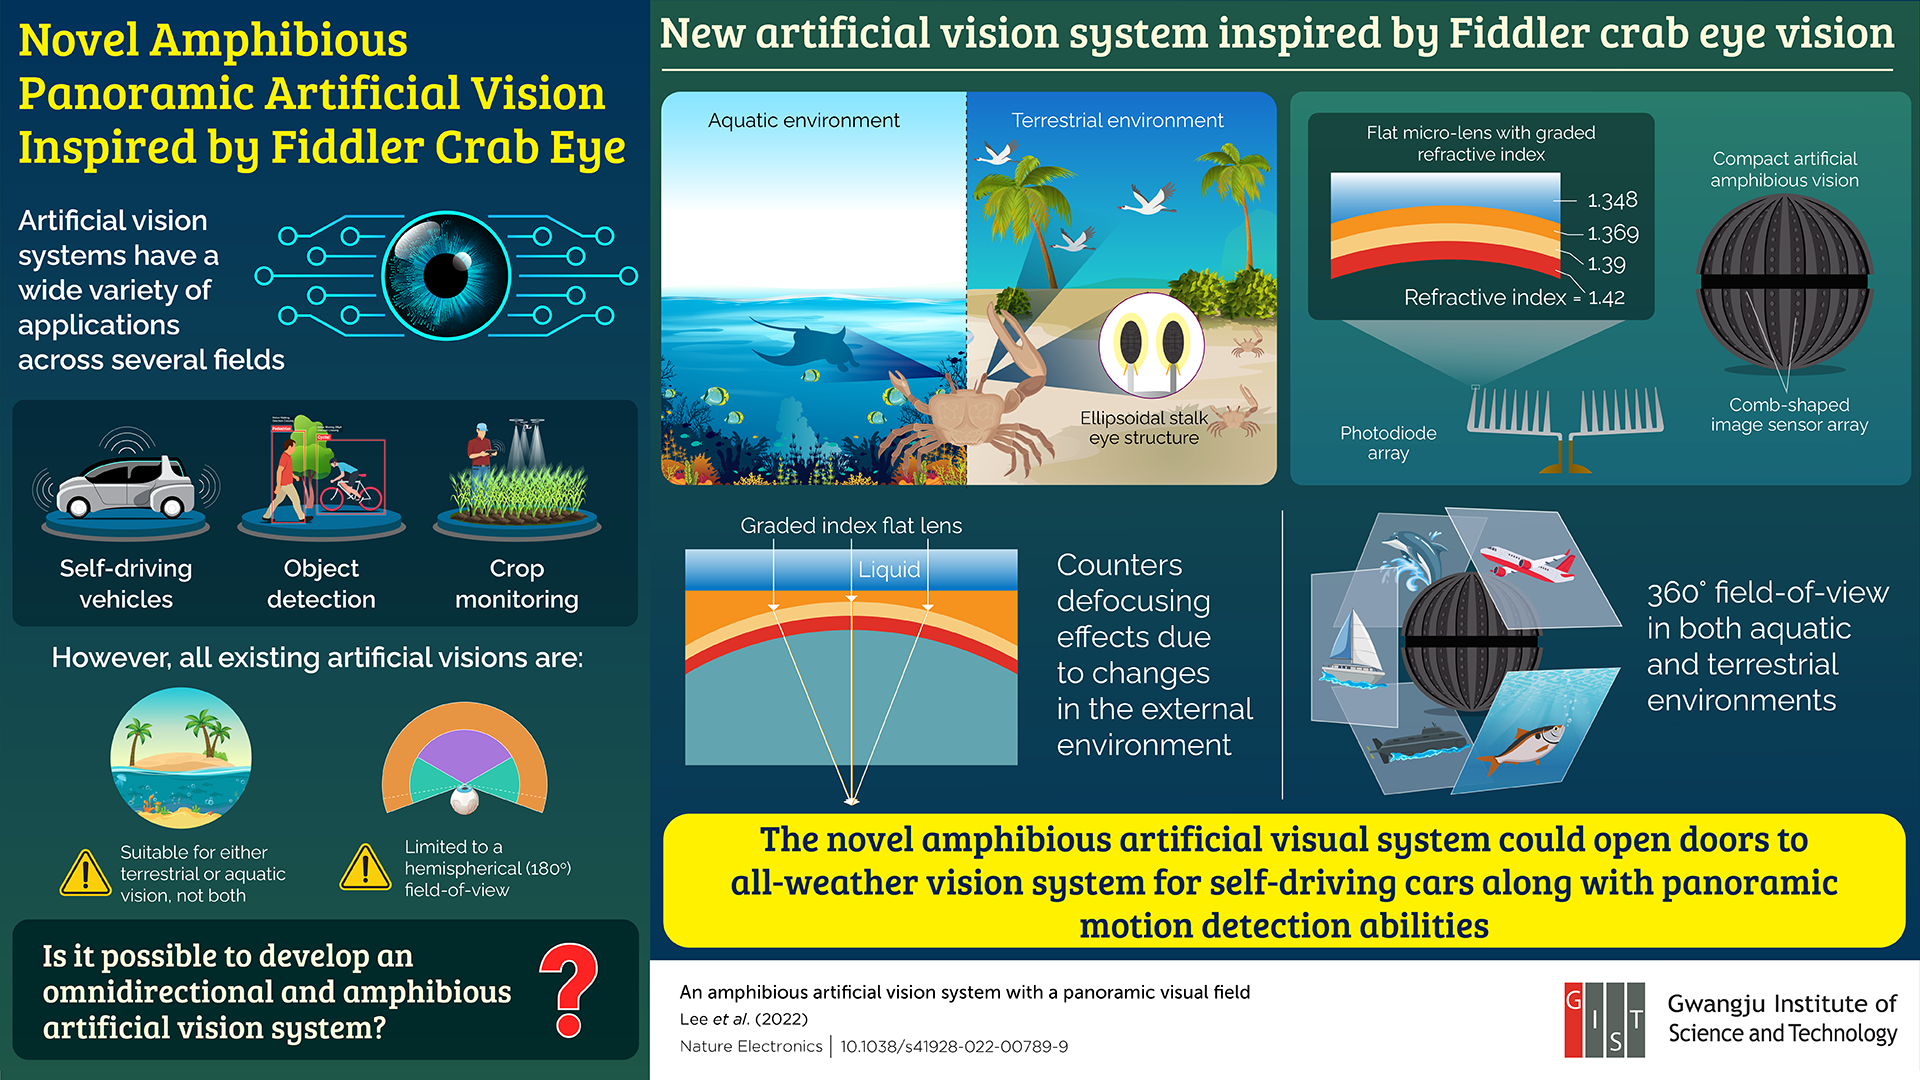 Fiddler Crab Eye inspires research into novel Artificial Vision solution